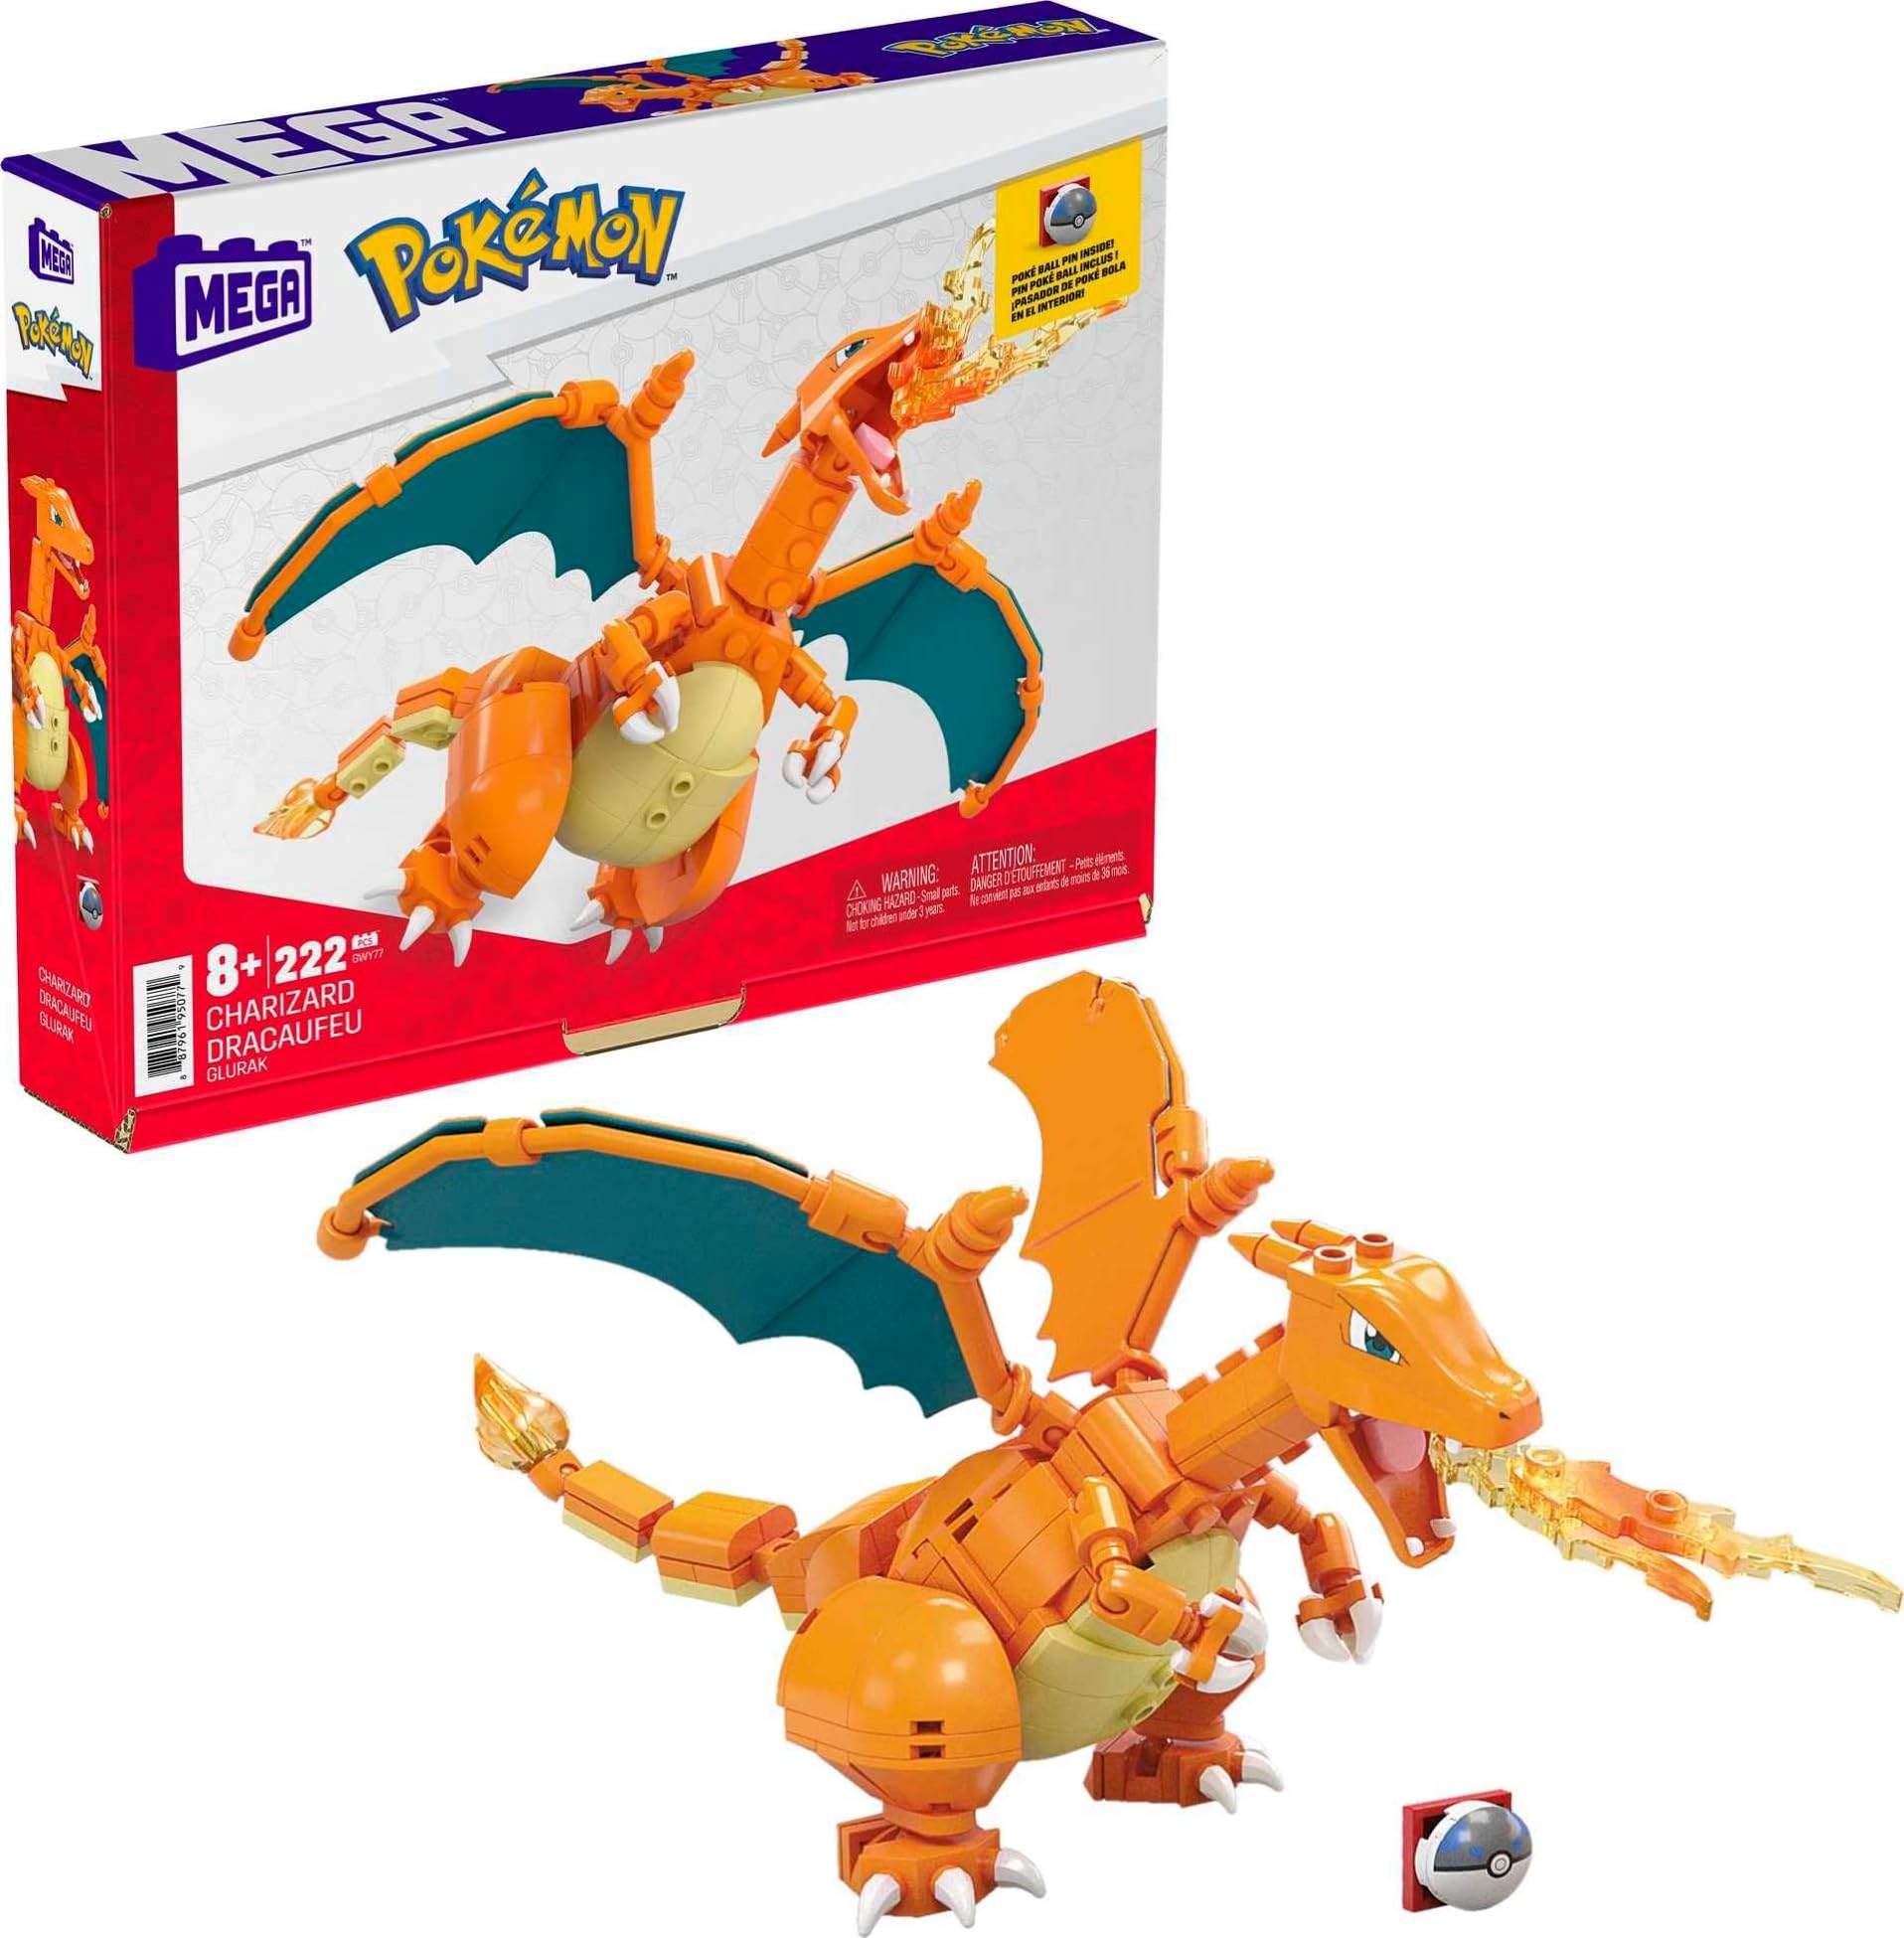 222-Piece Mega Pokemon 4" Charizard Action Figure Building Toy Set $8.63 + Free Shipping w/ Prime or on $35+